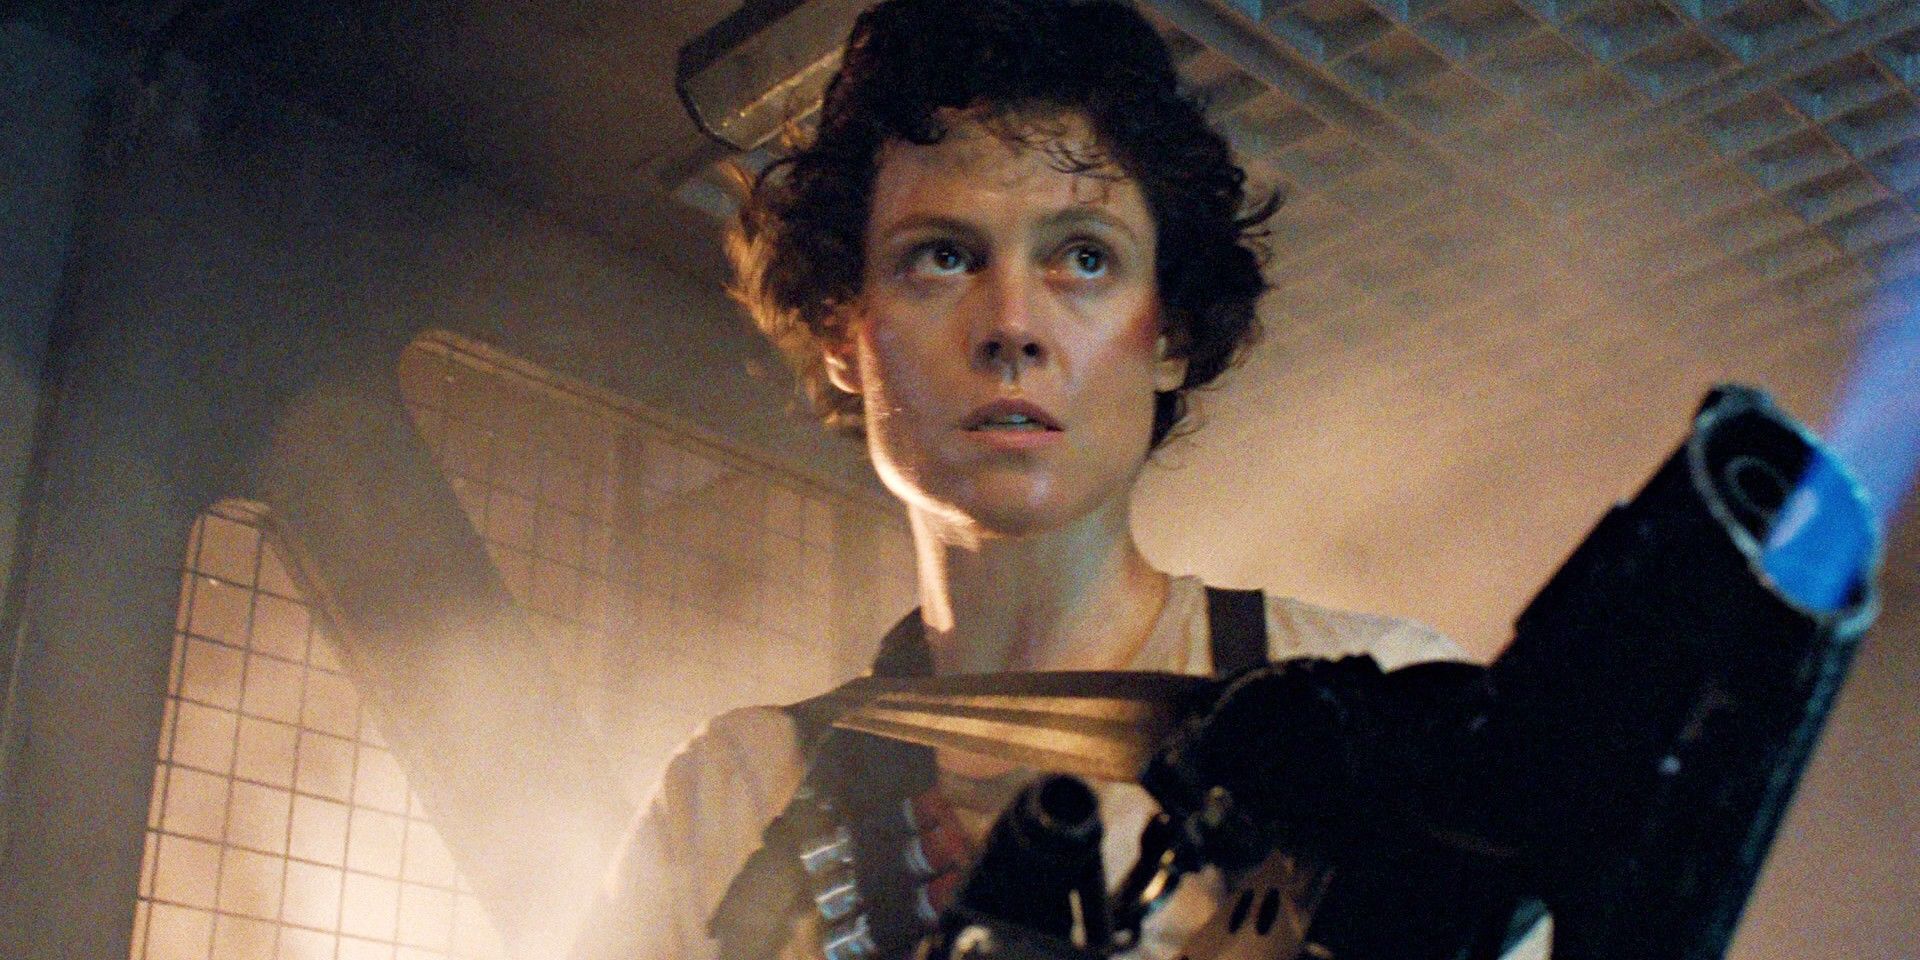 Sigourney Weaver, as Ripley, prepares to attack in Aliens (1986)